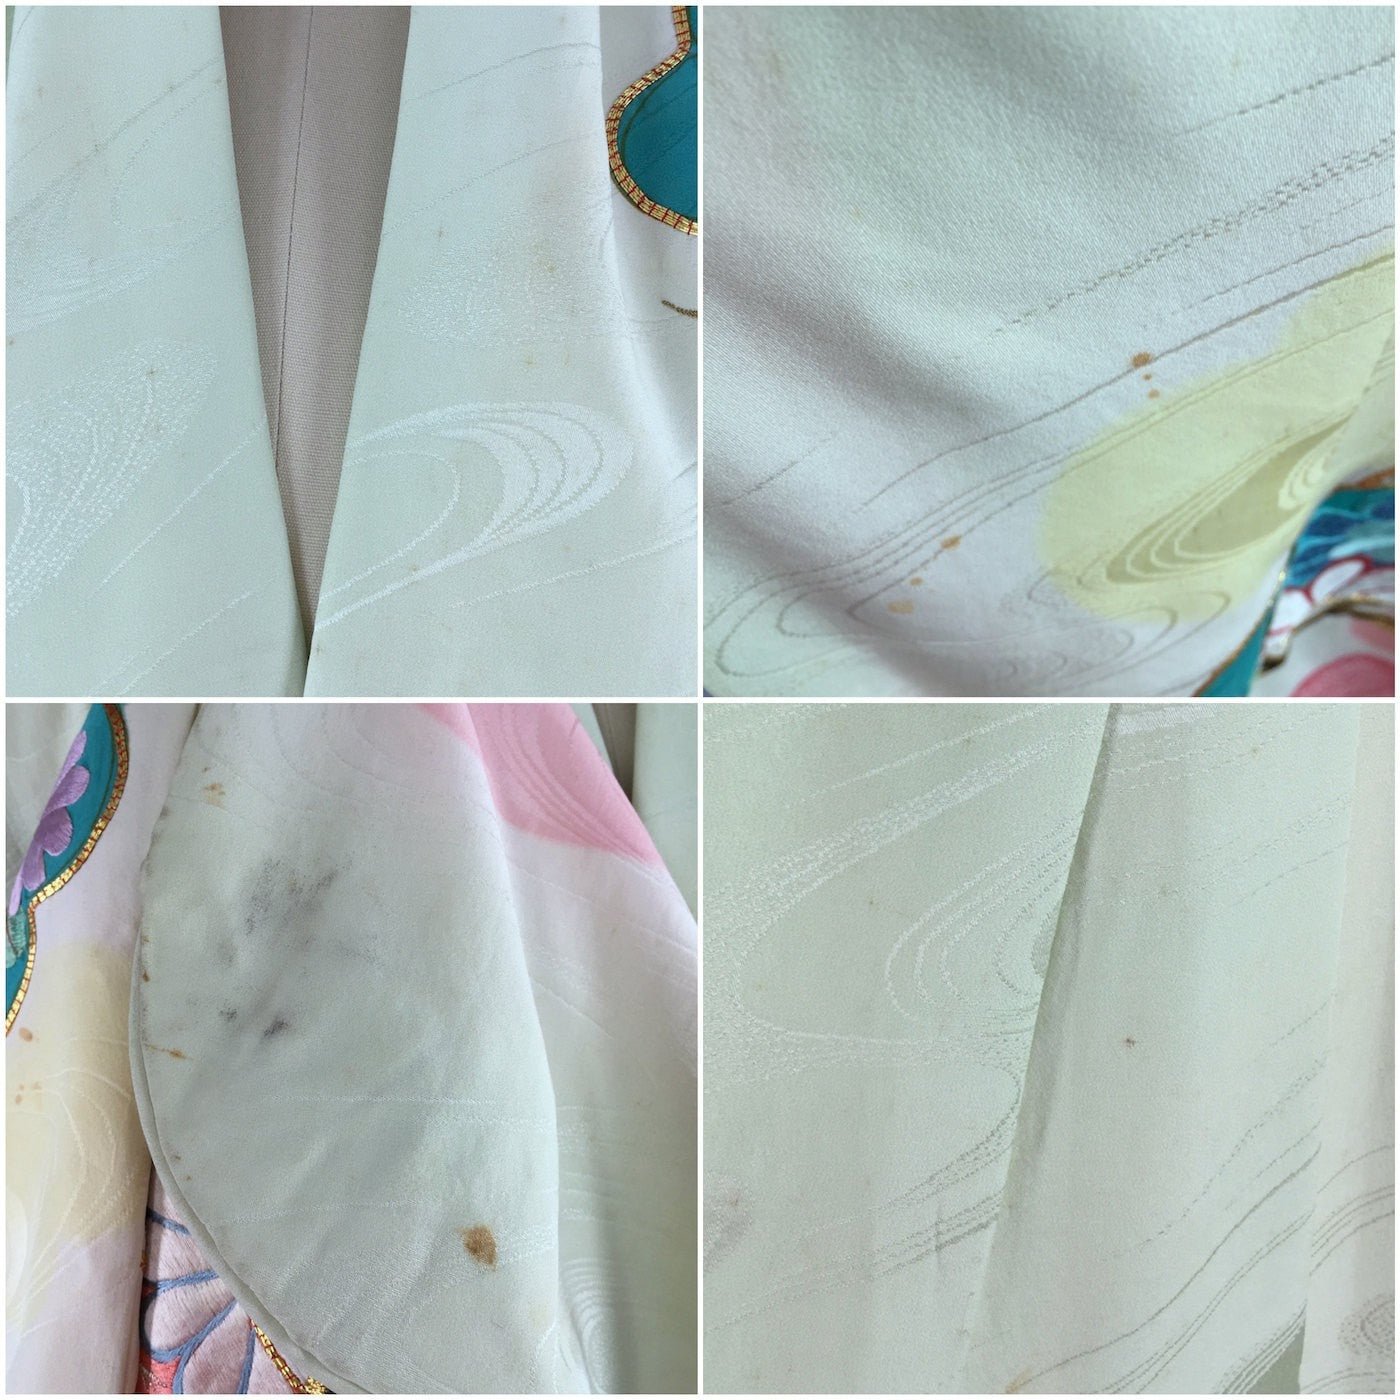 Vintage 1960s Vintage Silk Kimono Robe Furisode / Dressing Gown Robe - ThisBlueBird